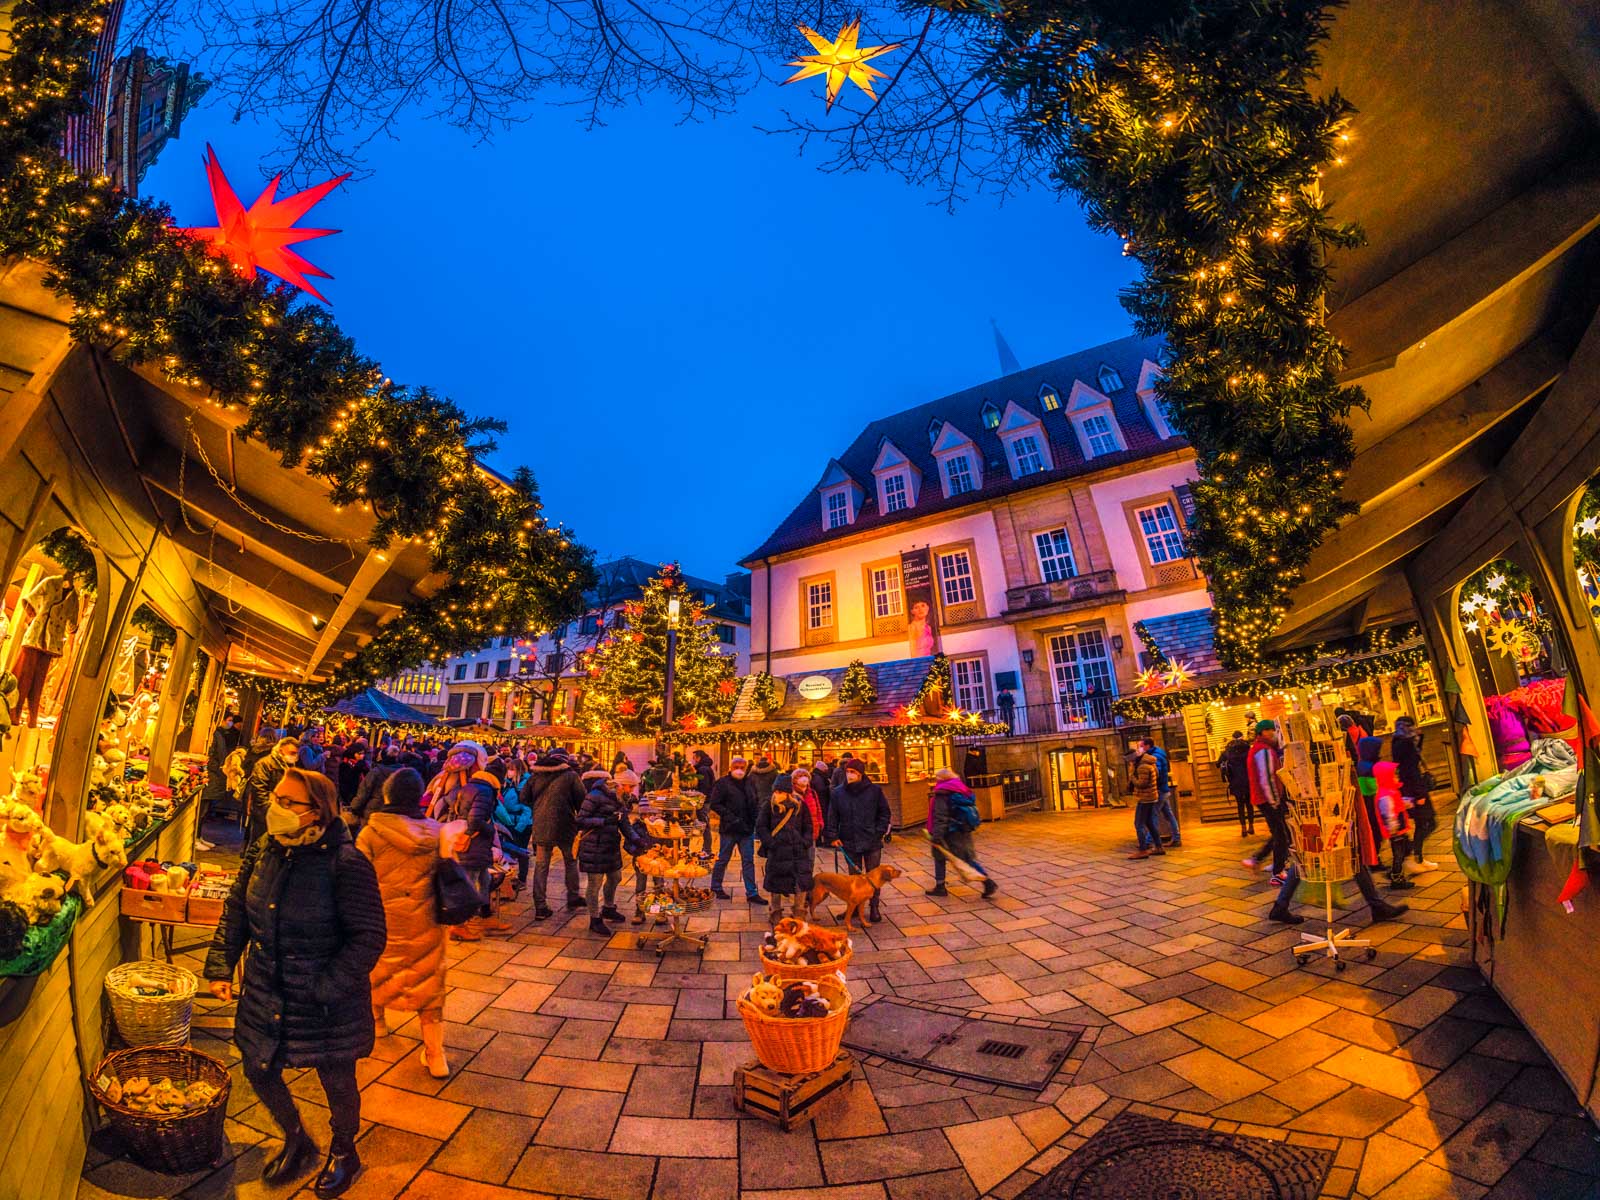 Christmas market at the 'Alter Markt' in December 2021 (Bielefeld, Germany).